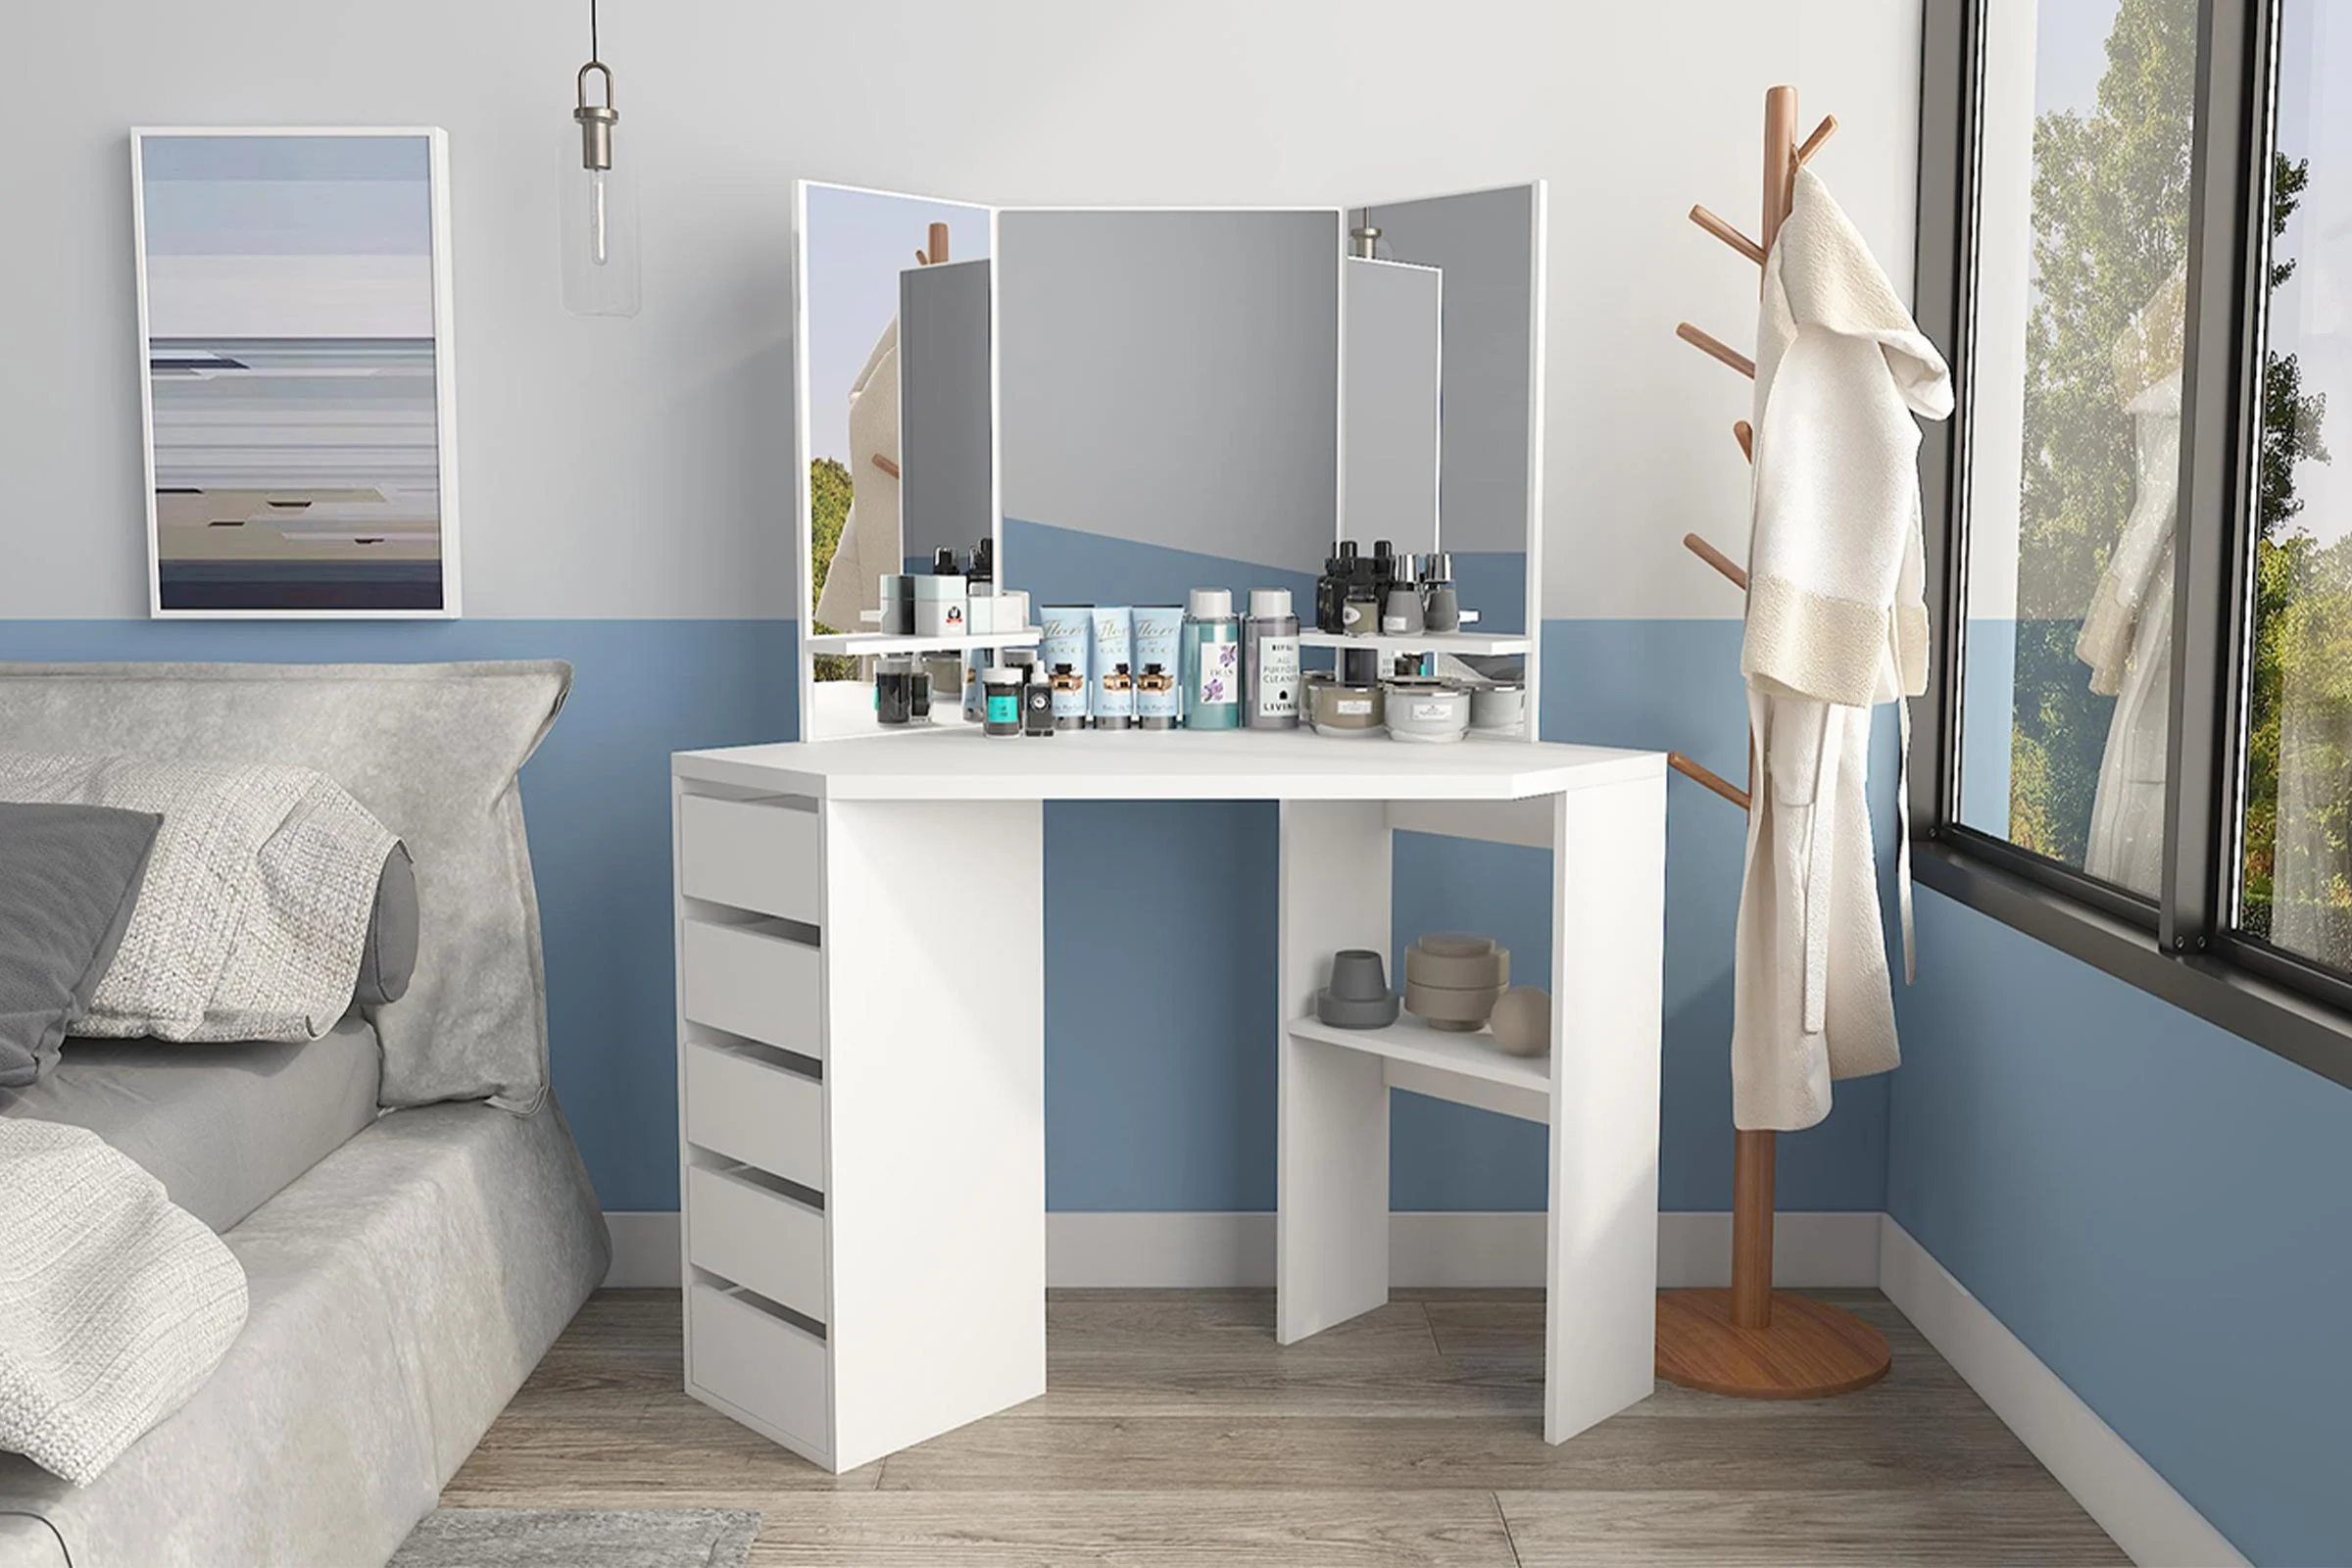 Northread Corner Vanity Desk Makeup Table: 5 Drawers and 3 Mirrors